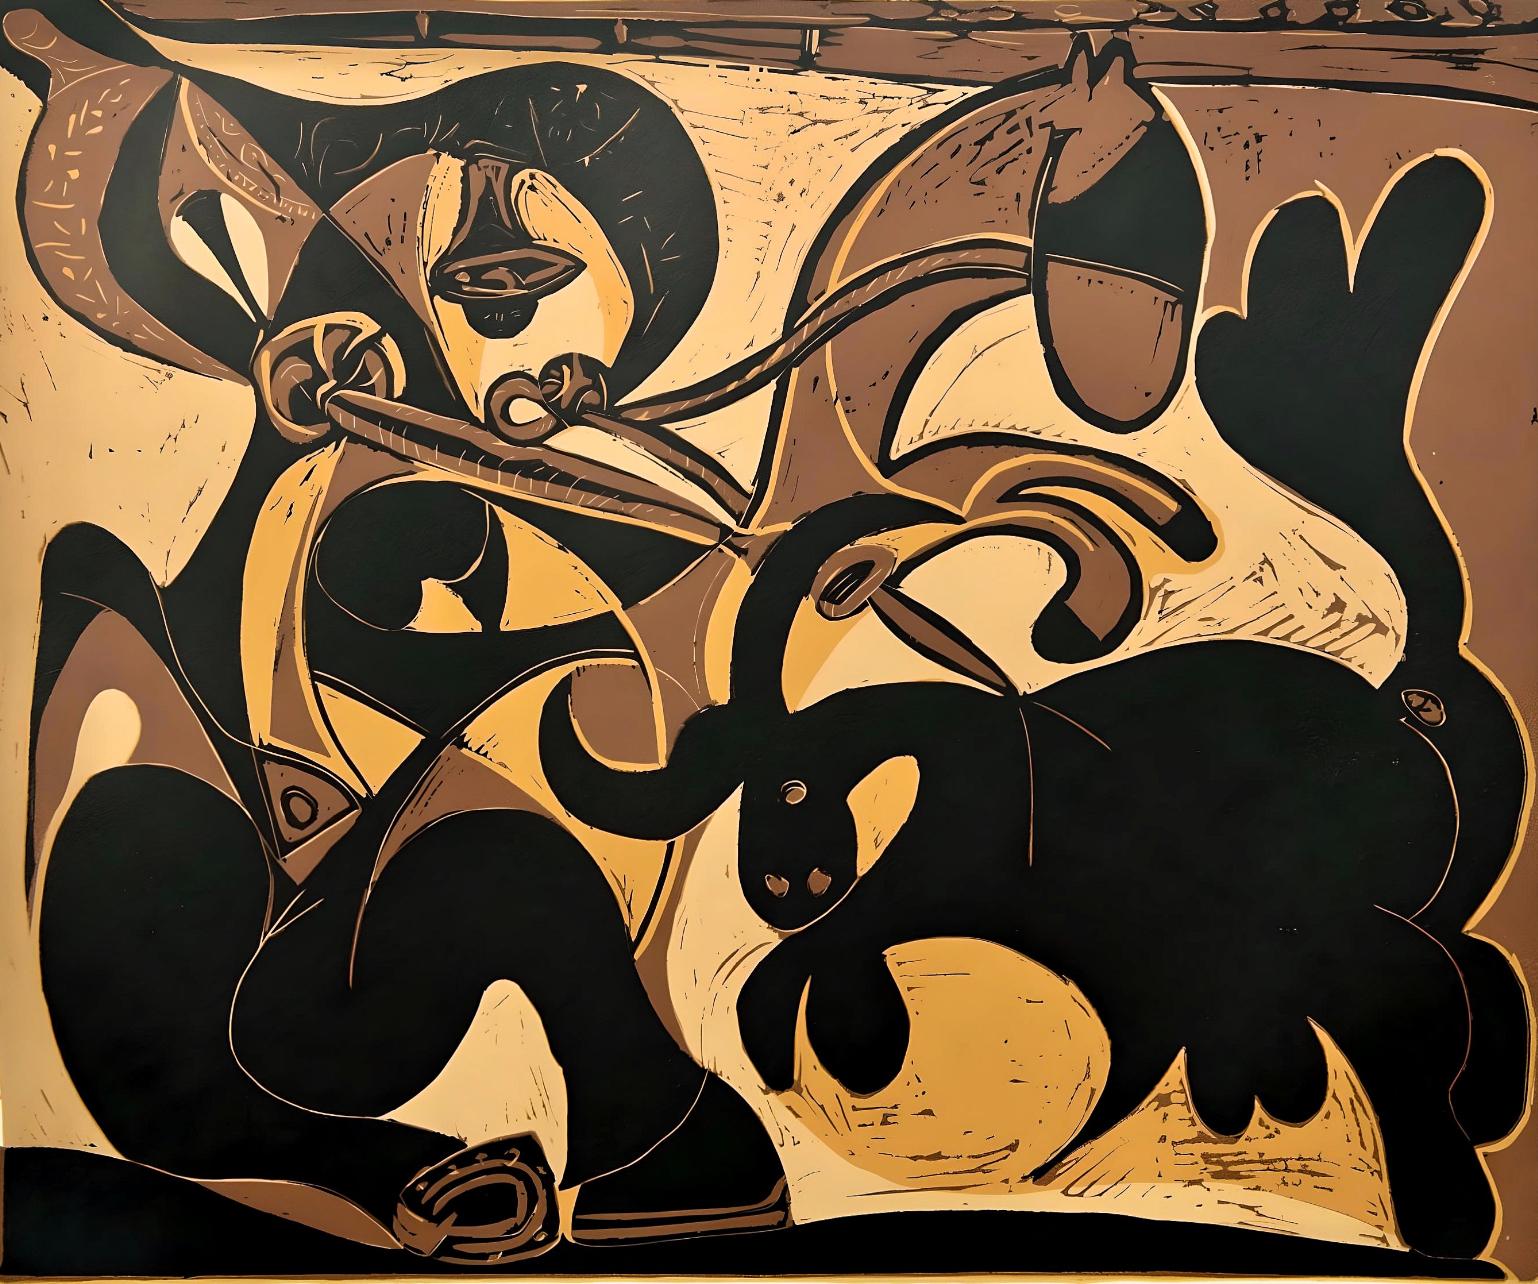 Picasso, Picador Goading Bull, Pablo Picasso-Linogravures (after)